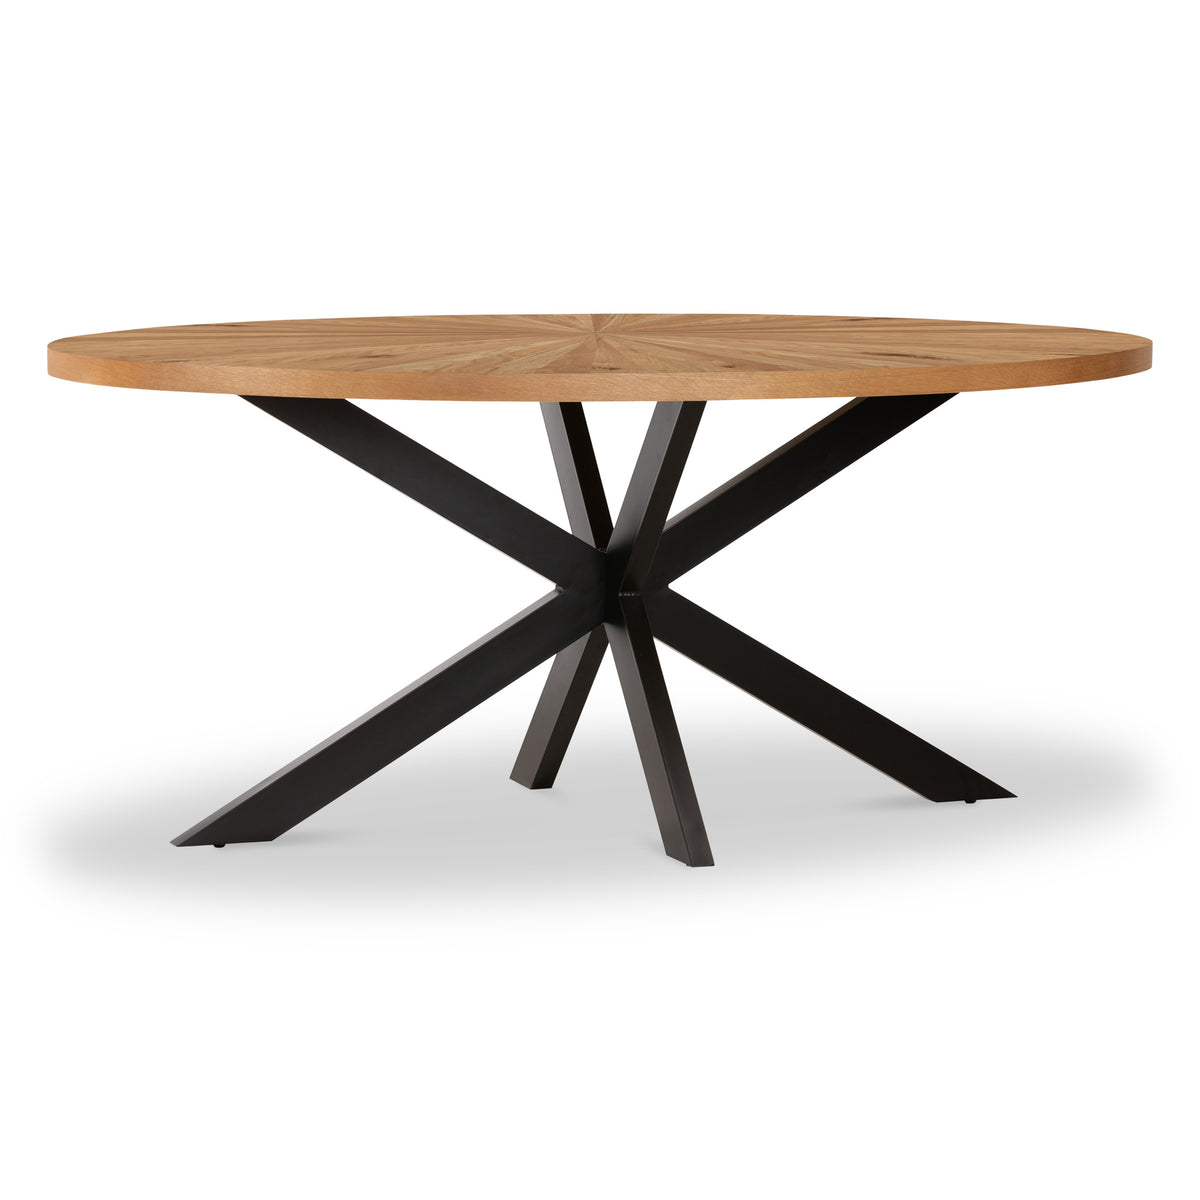 Sunburst Oak 180cm Ellipse Dining Table from Roseland Furniture